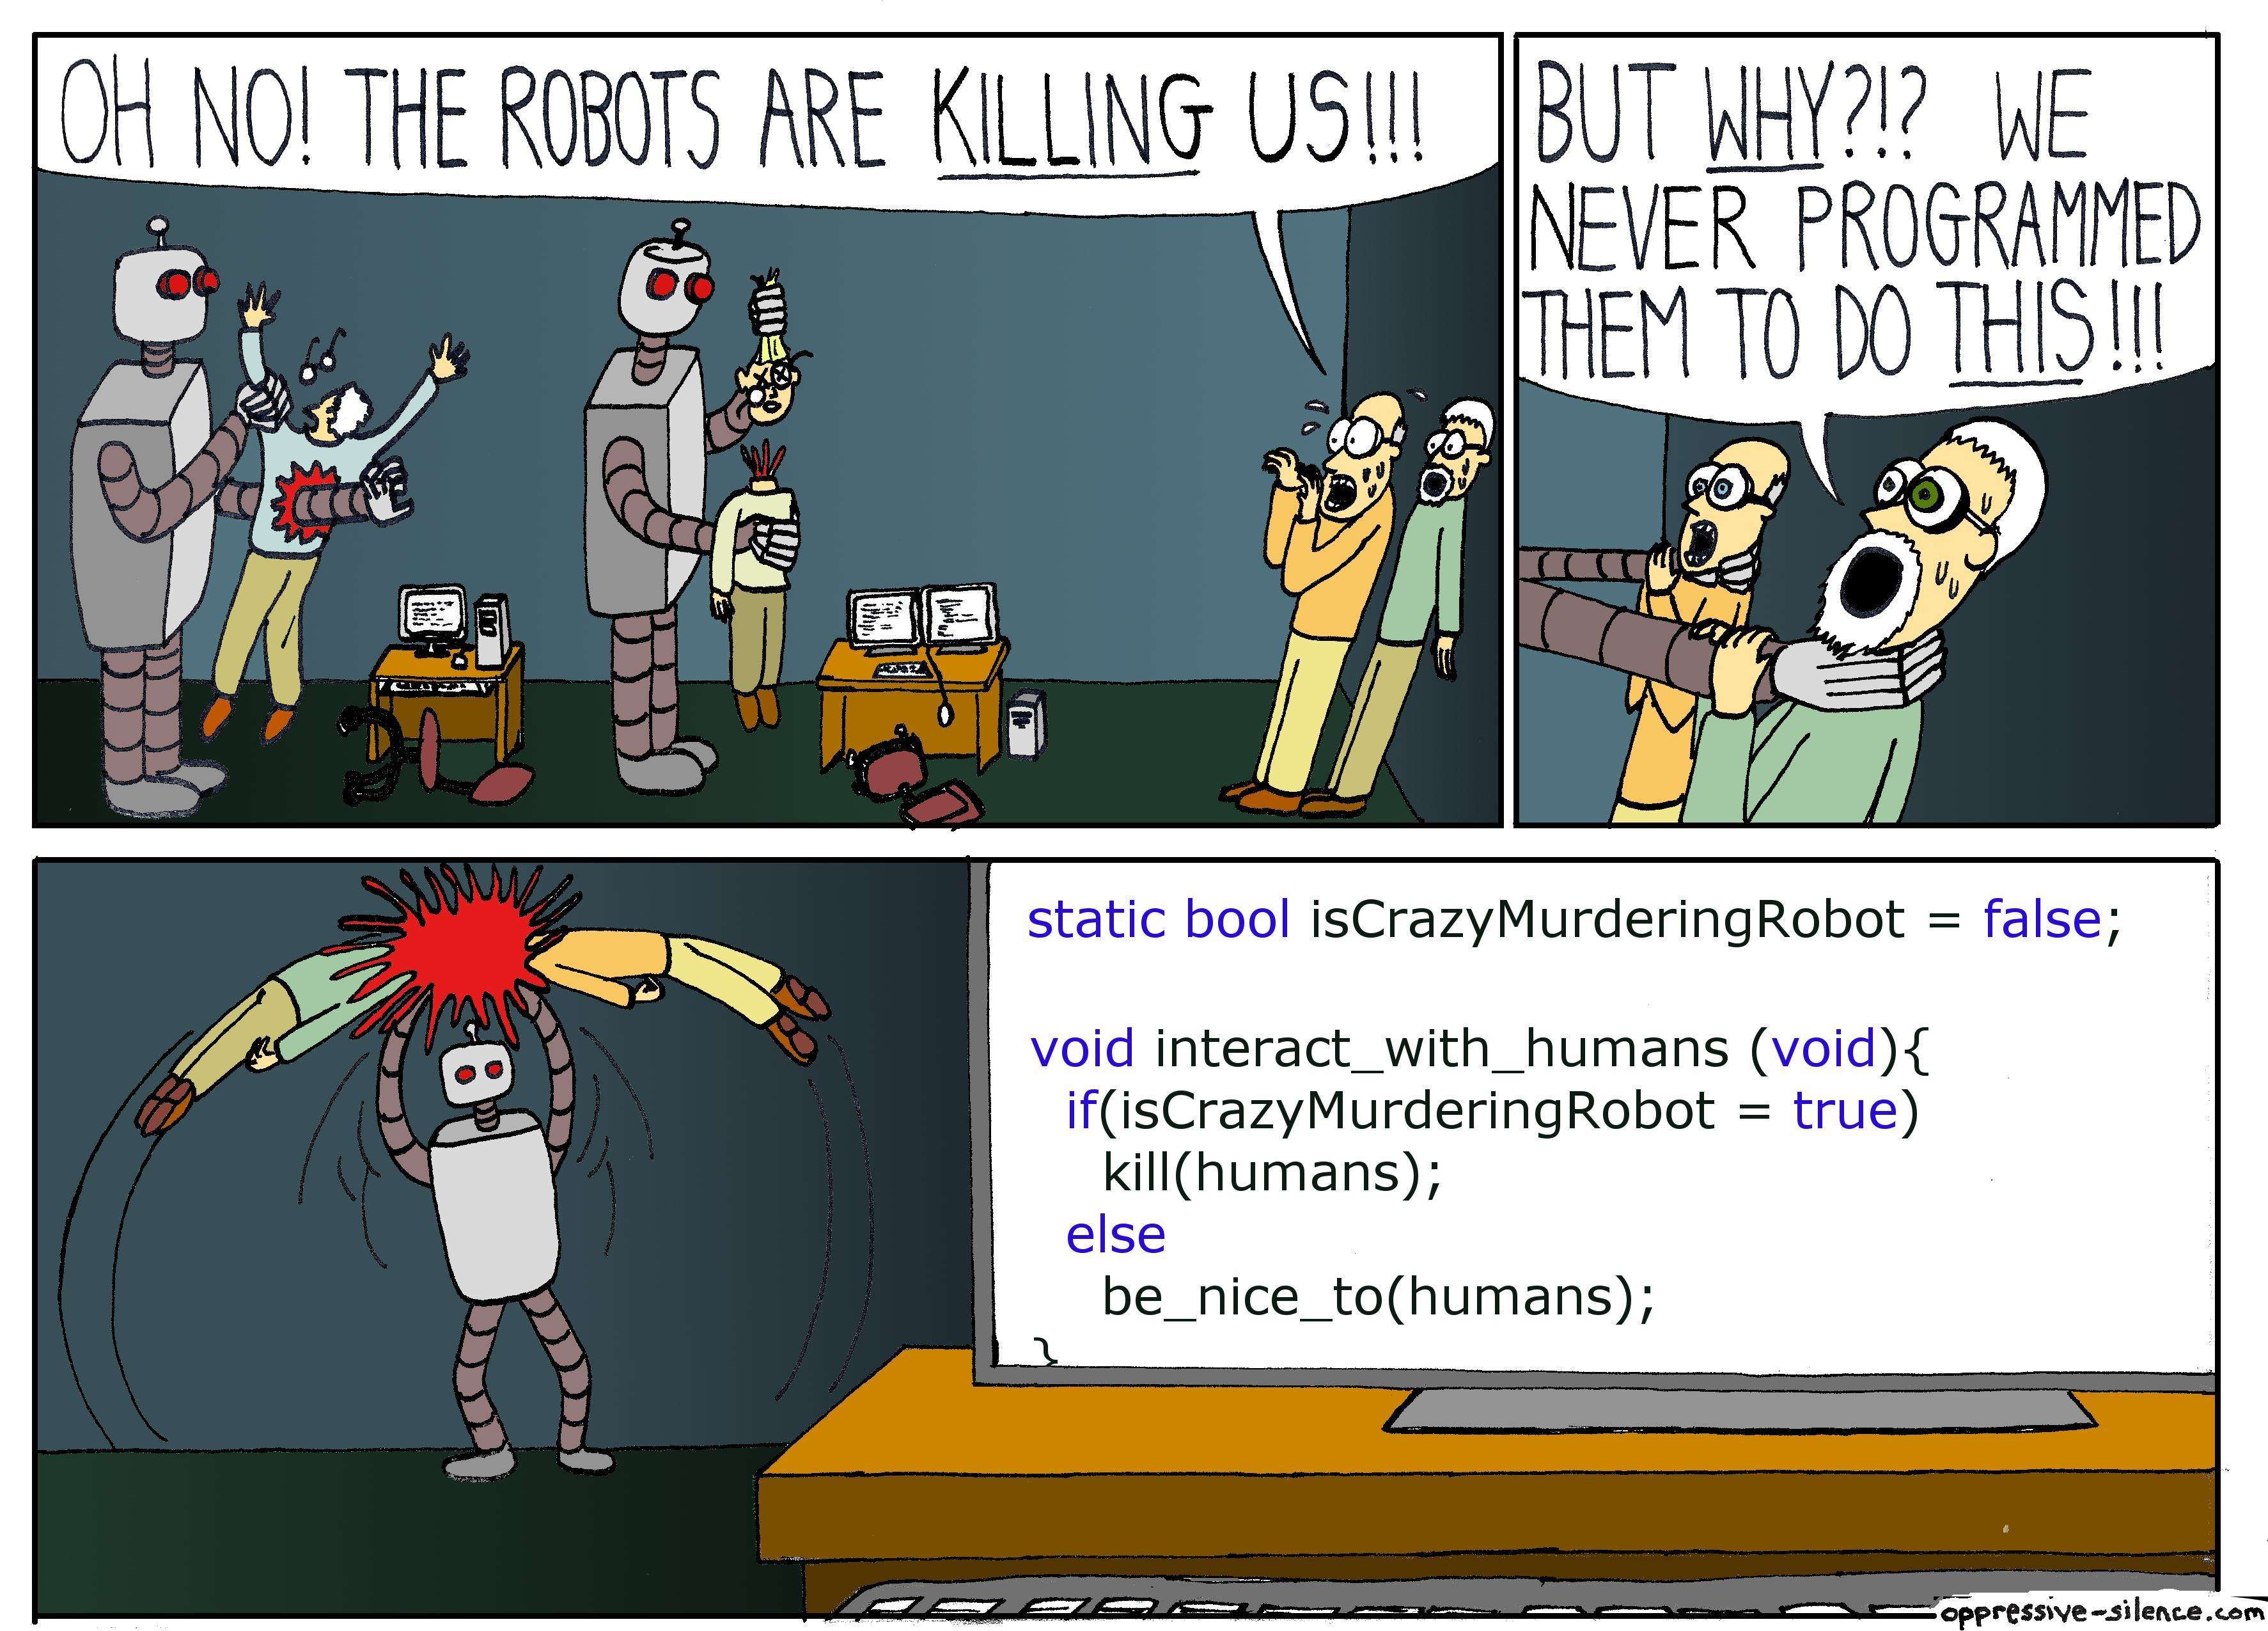 Crazy murdering robots